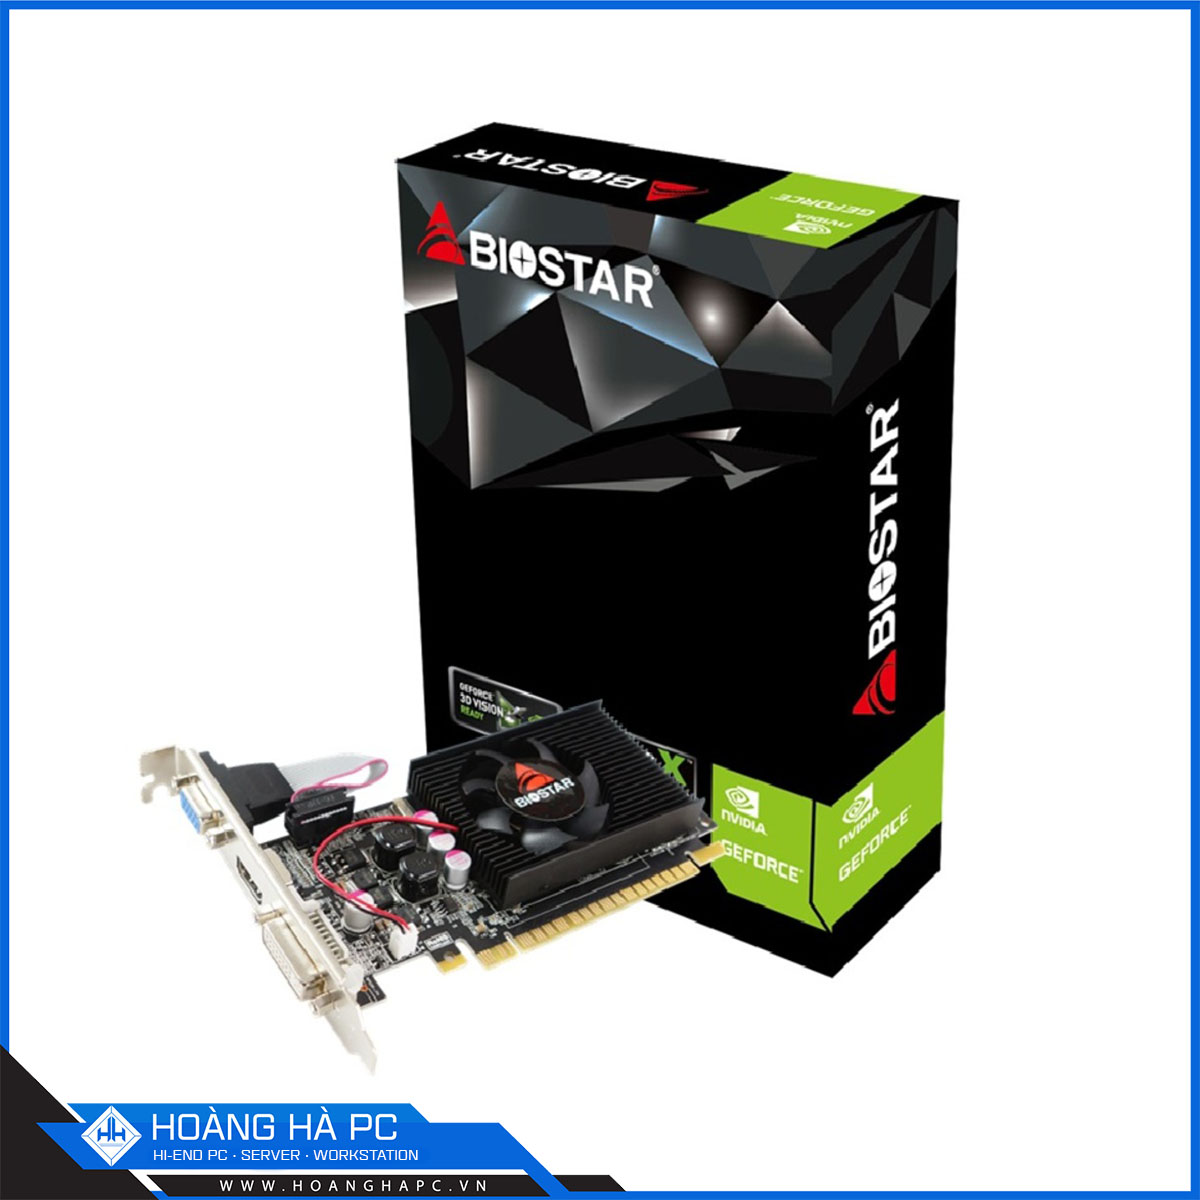 VGA Biostar G210 1GB